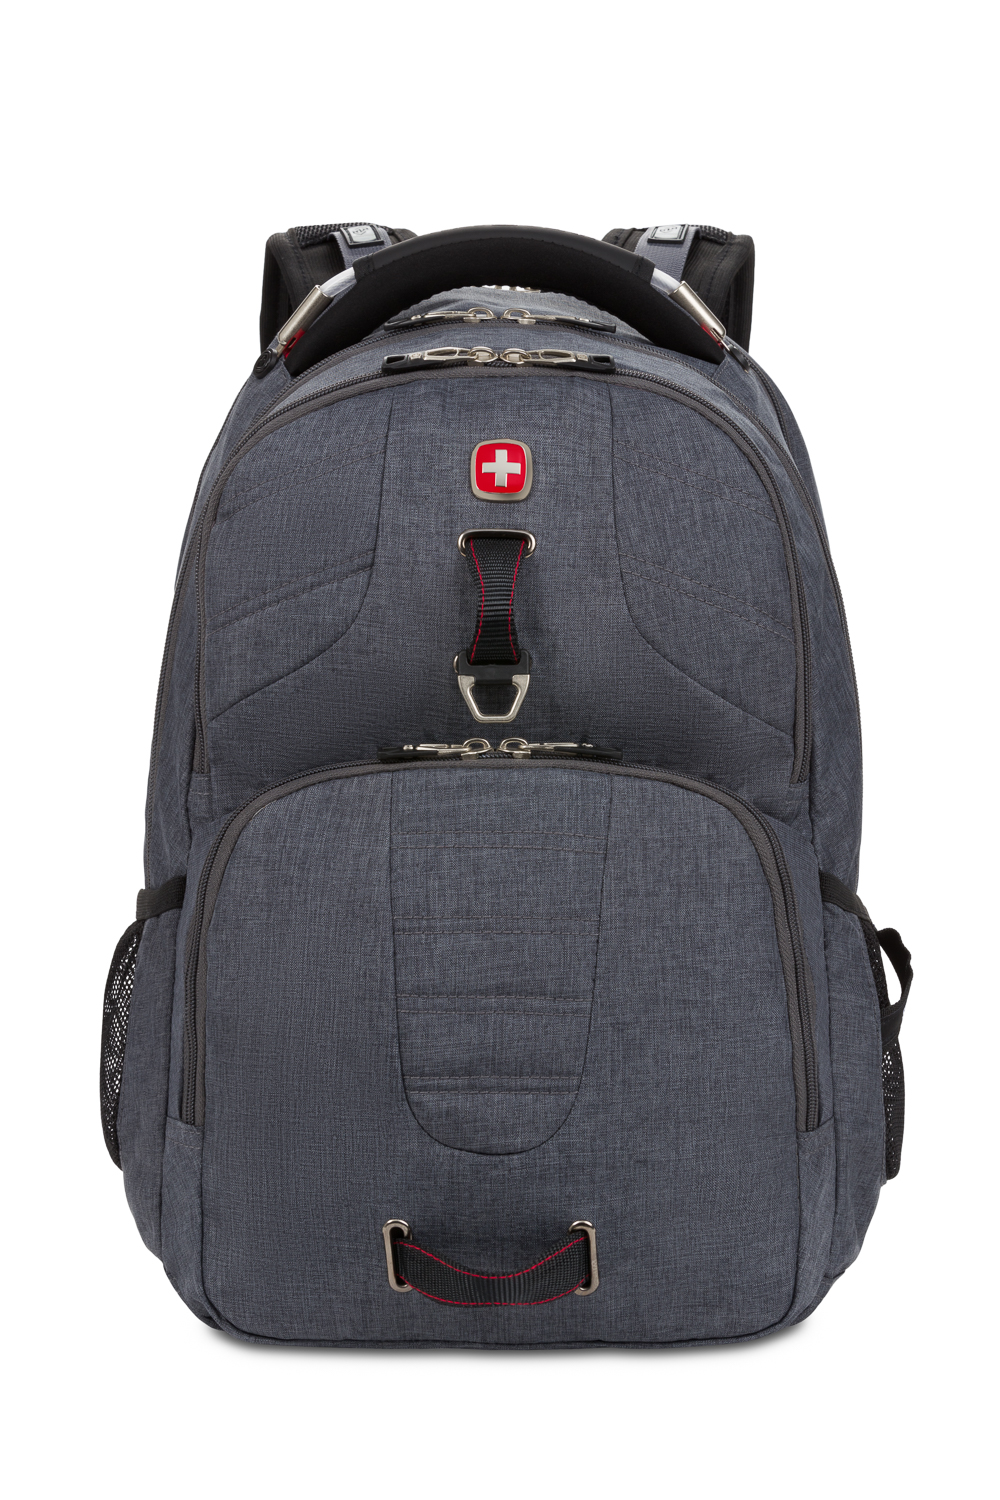 SWISSGEAR Large Padded 15-inch Laptop Backpack | Work, School, Commute–  backpacks4less.com